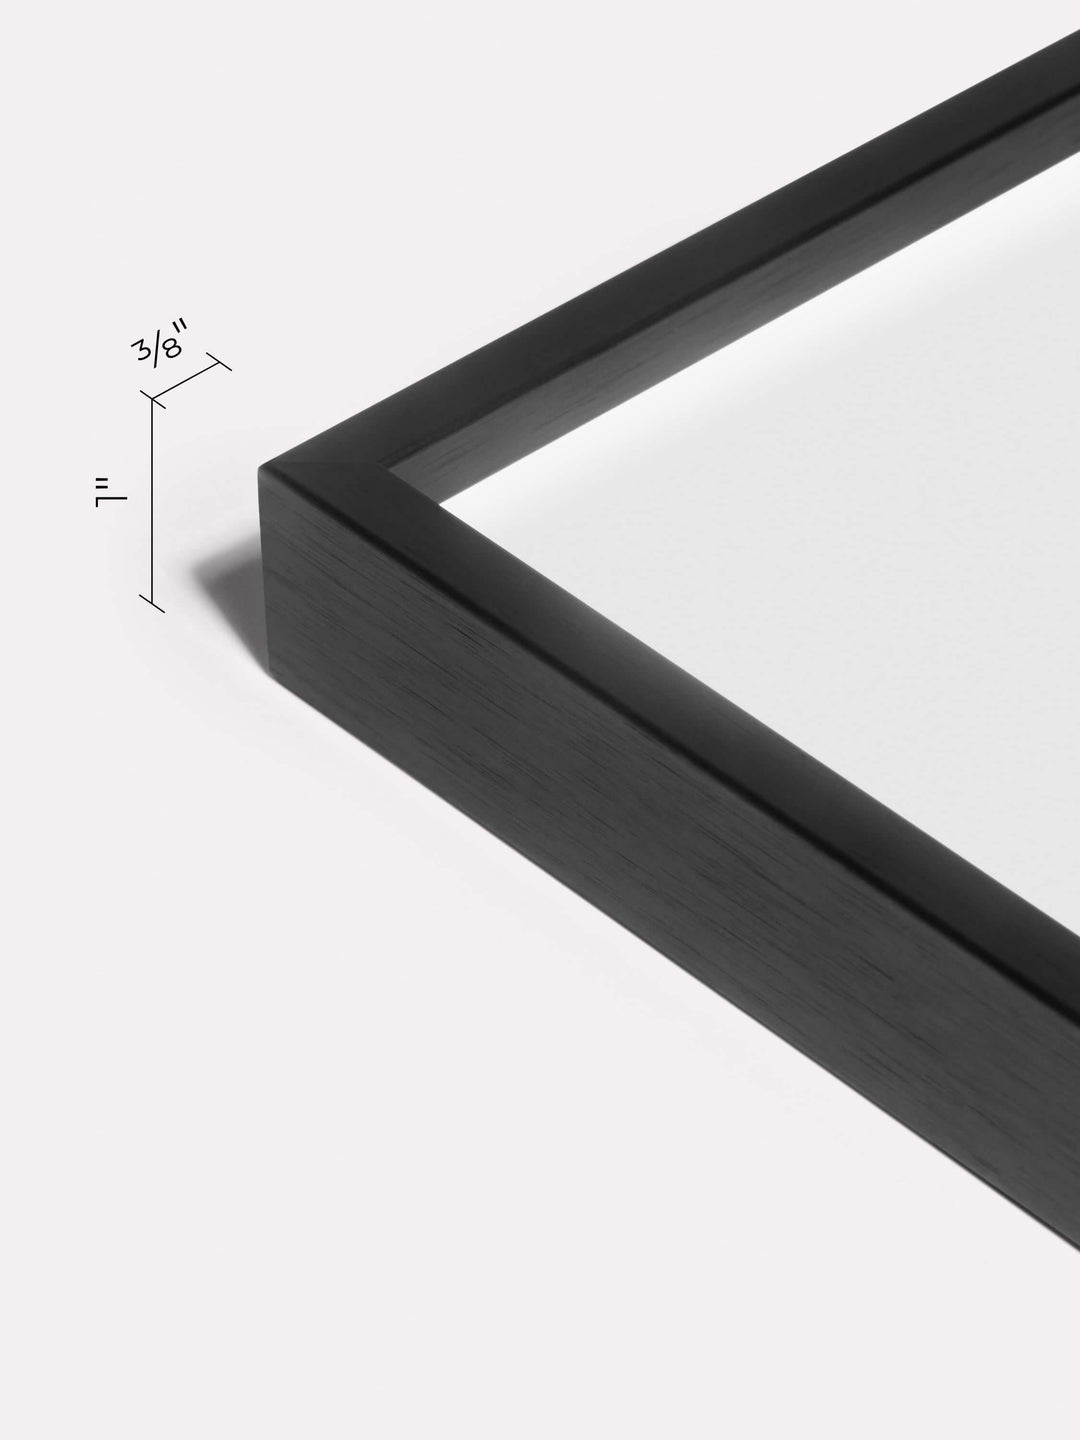 12x18-inch Thin Frame, Black - Close-up view